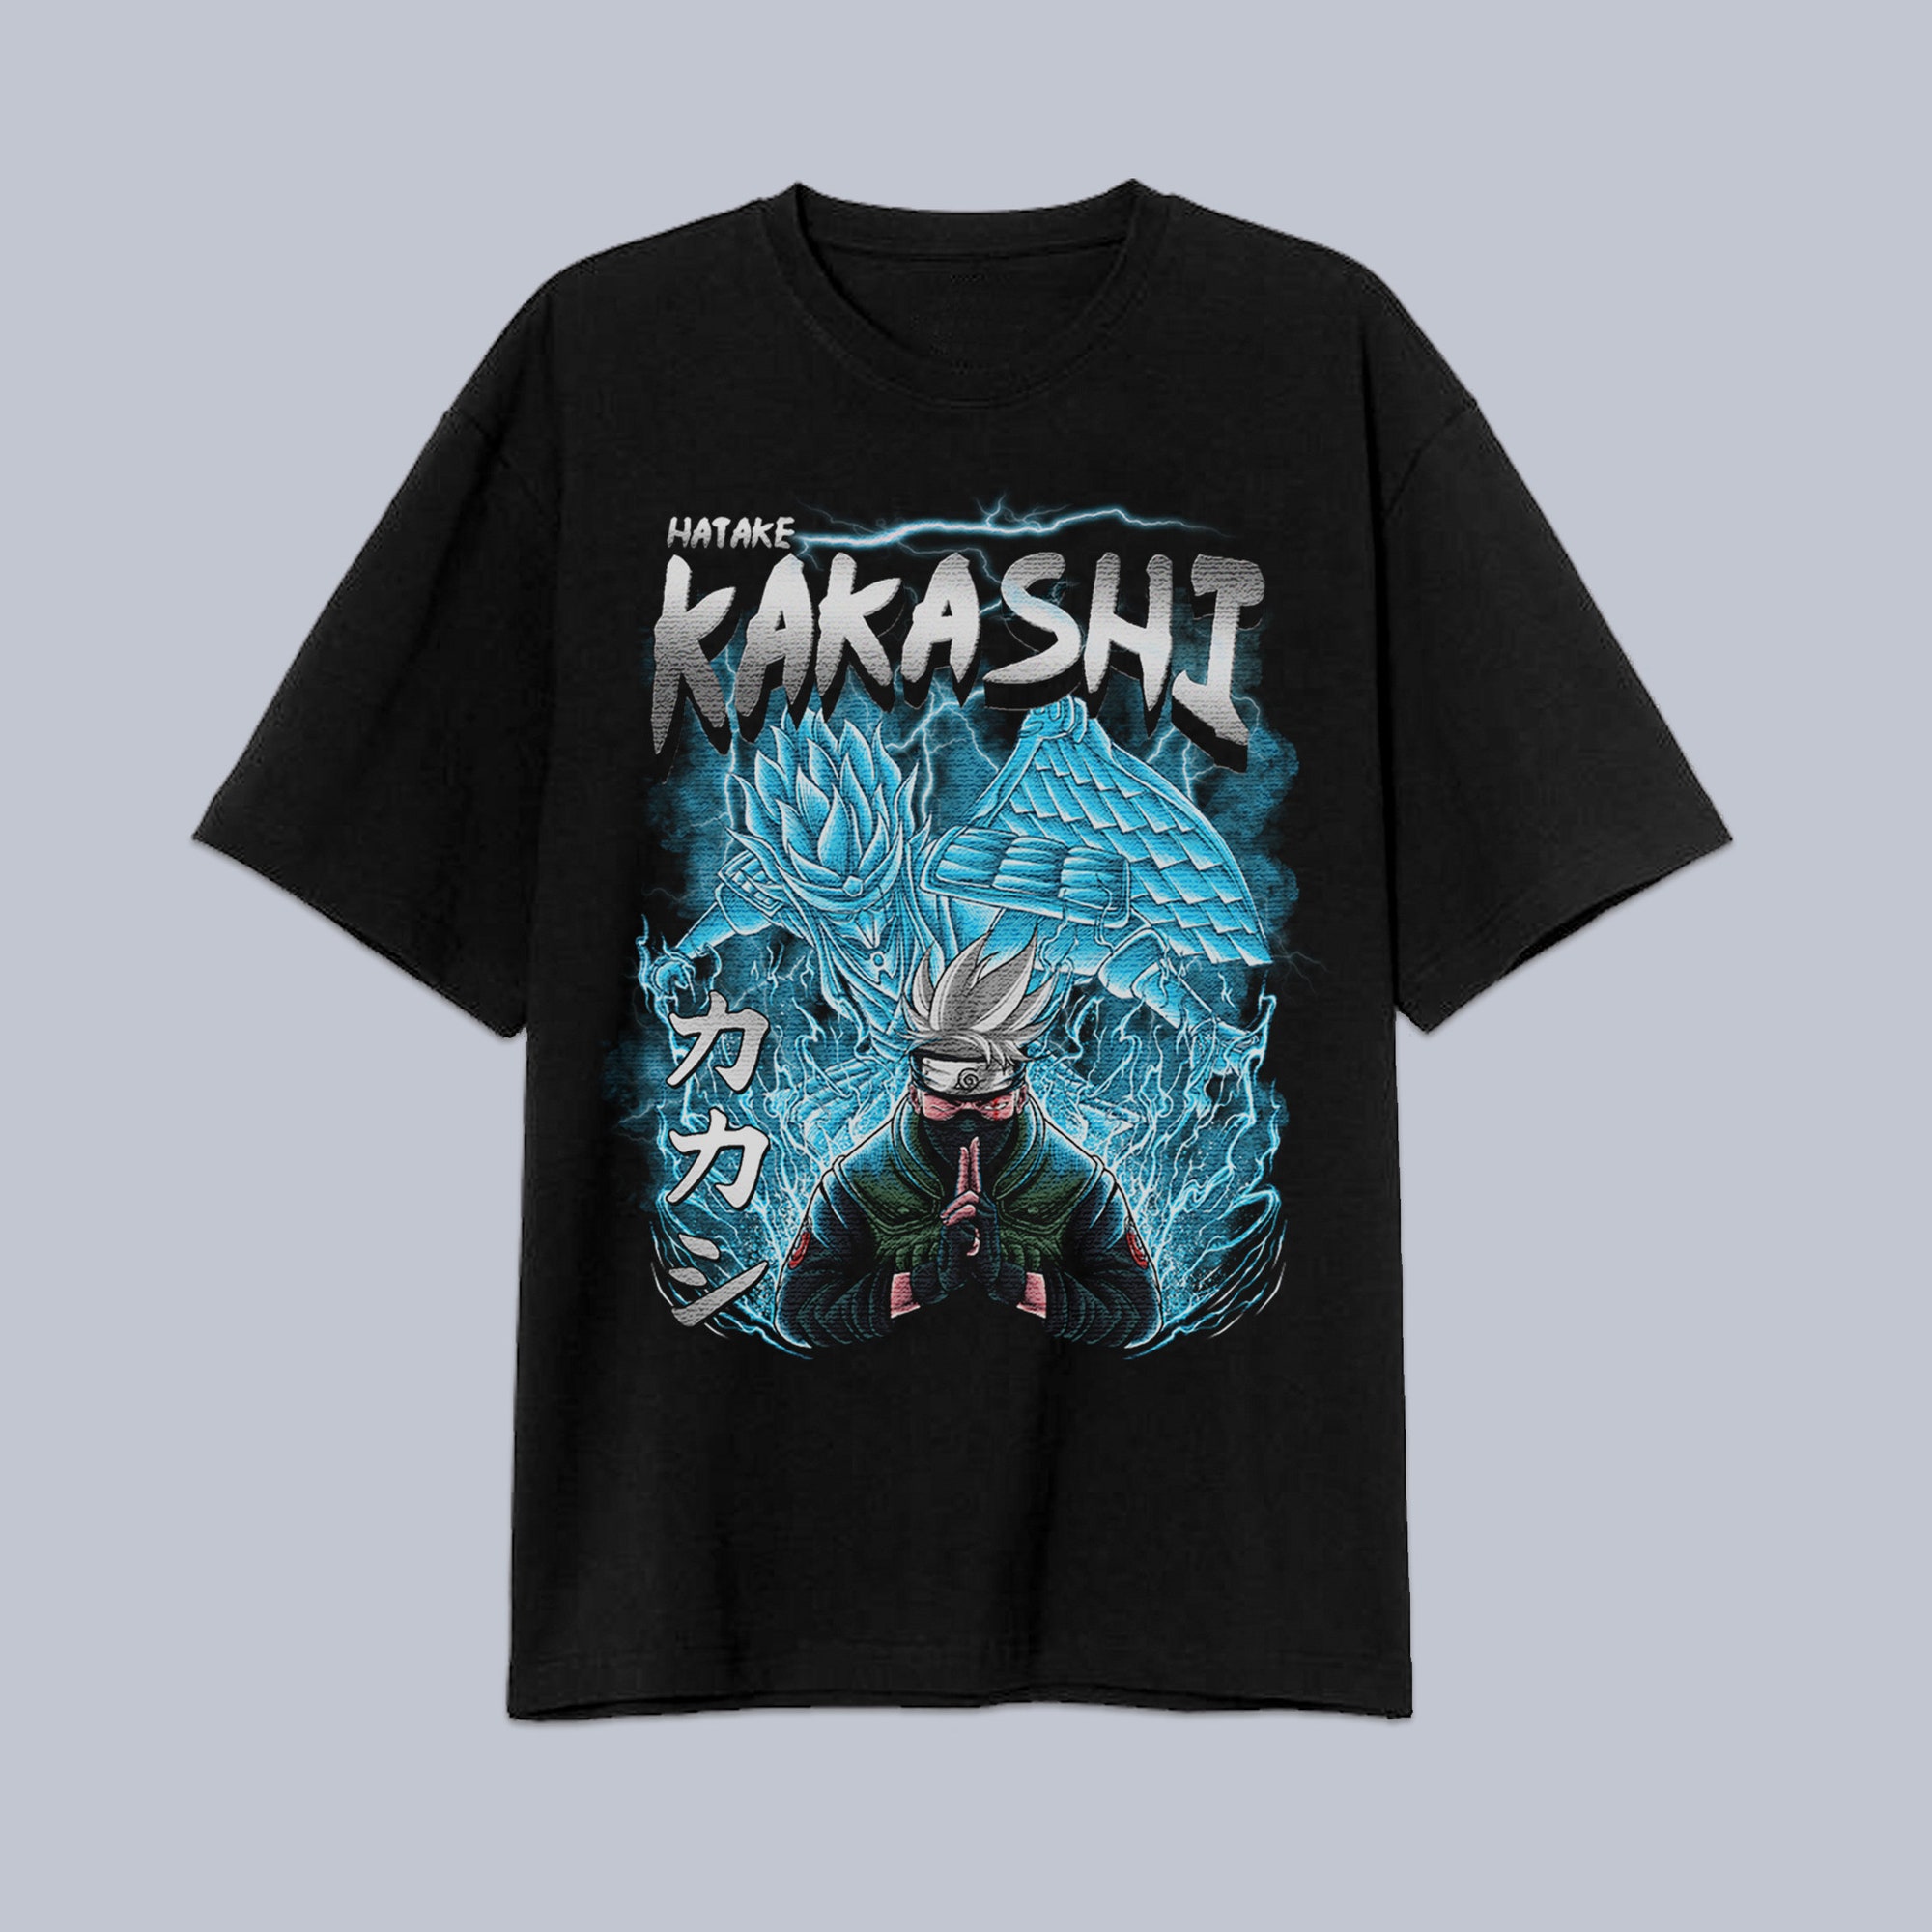 Discover Kahasshii Hatakke T-Shirt, Retro Anime T-Shirt